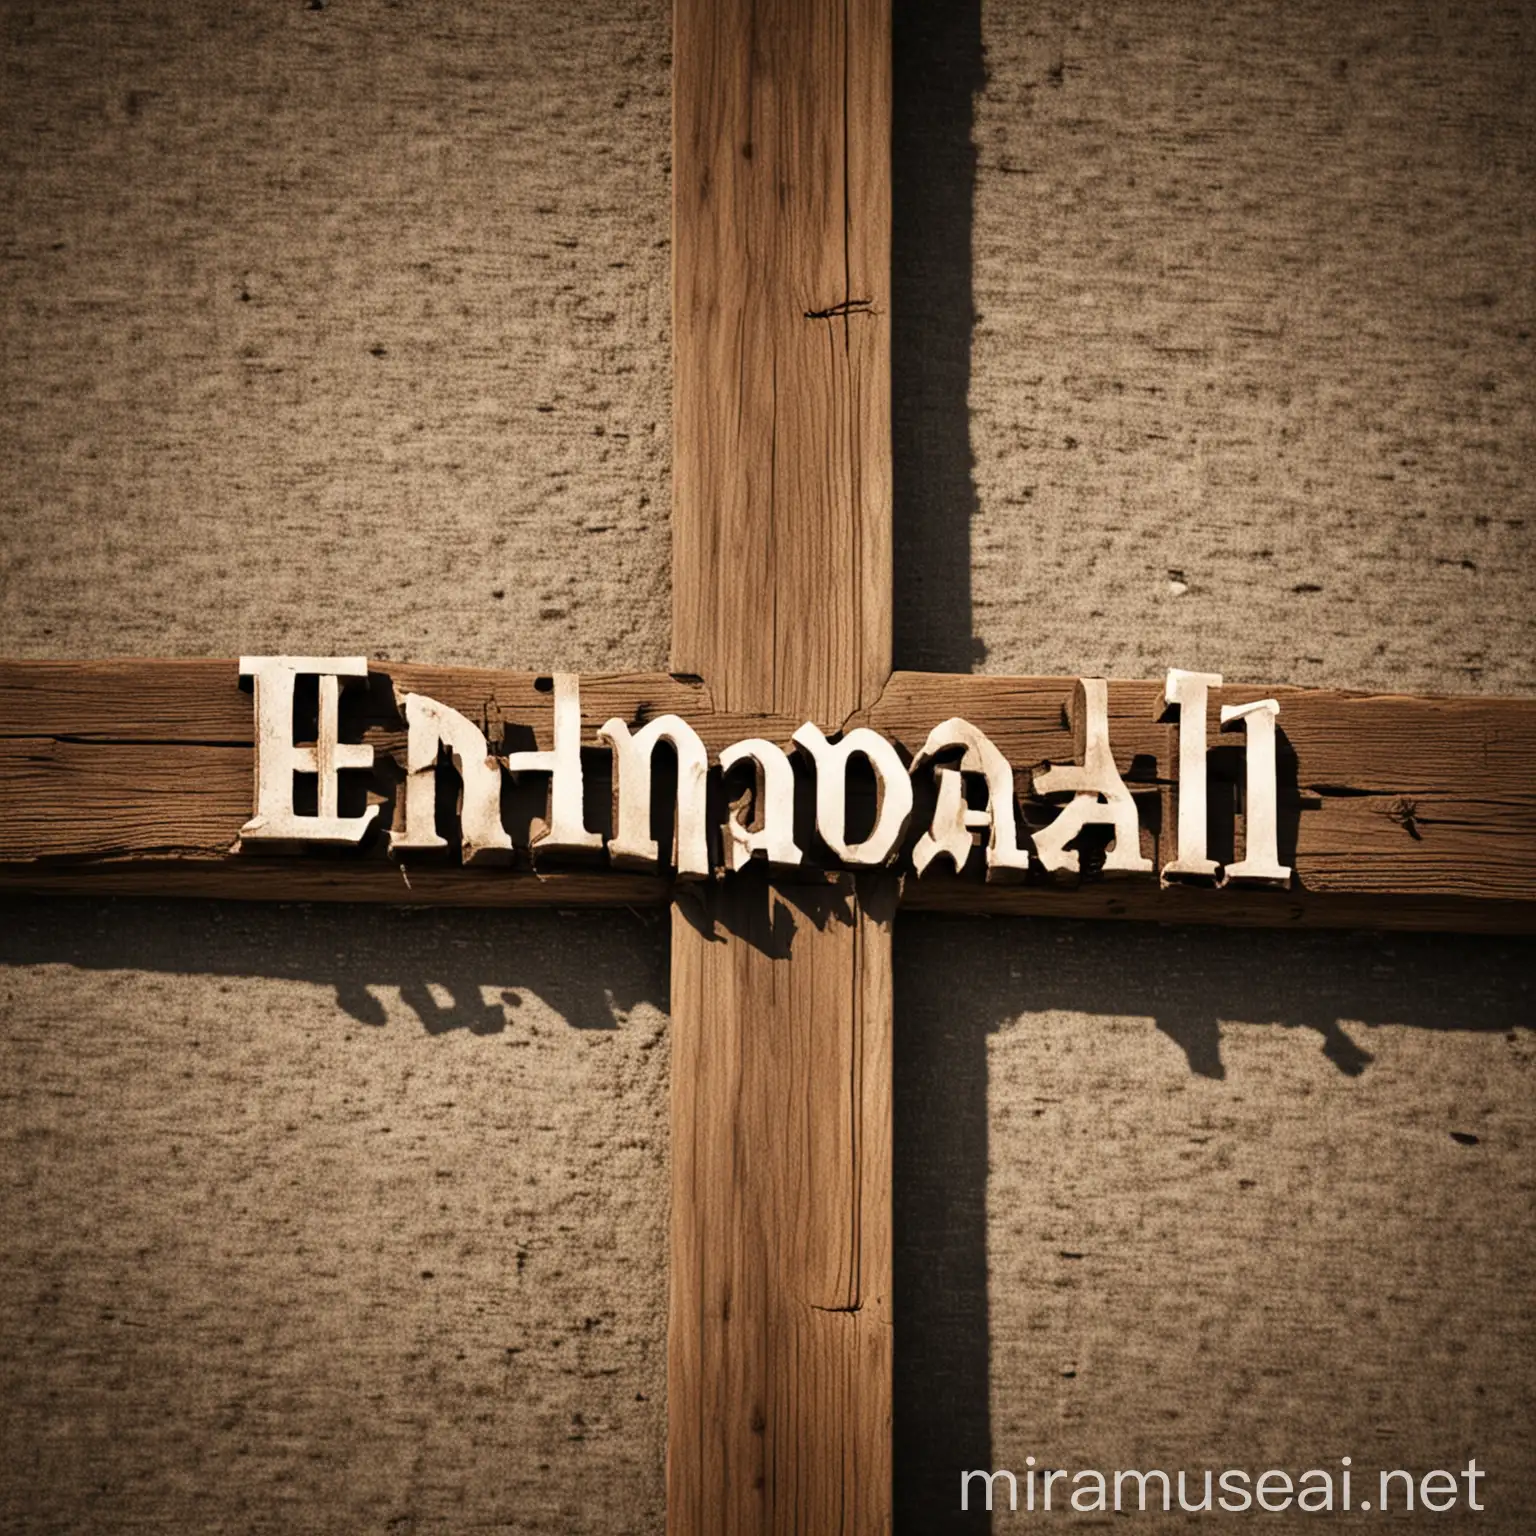 The word 'Emmanuel' on a cross